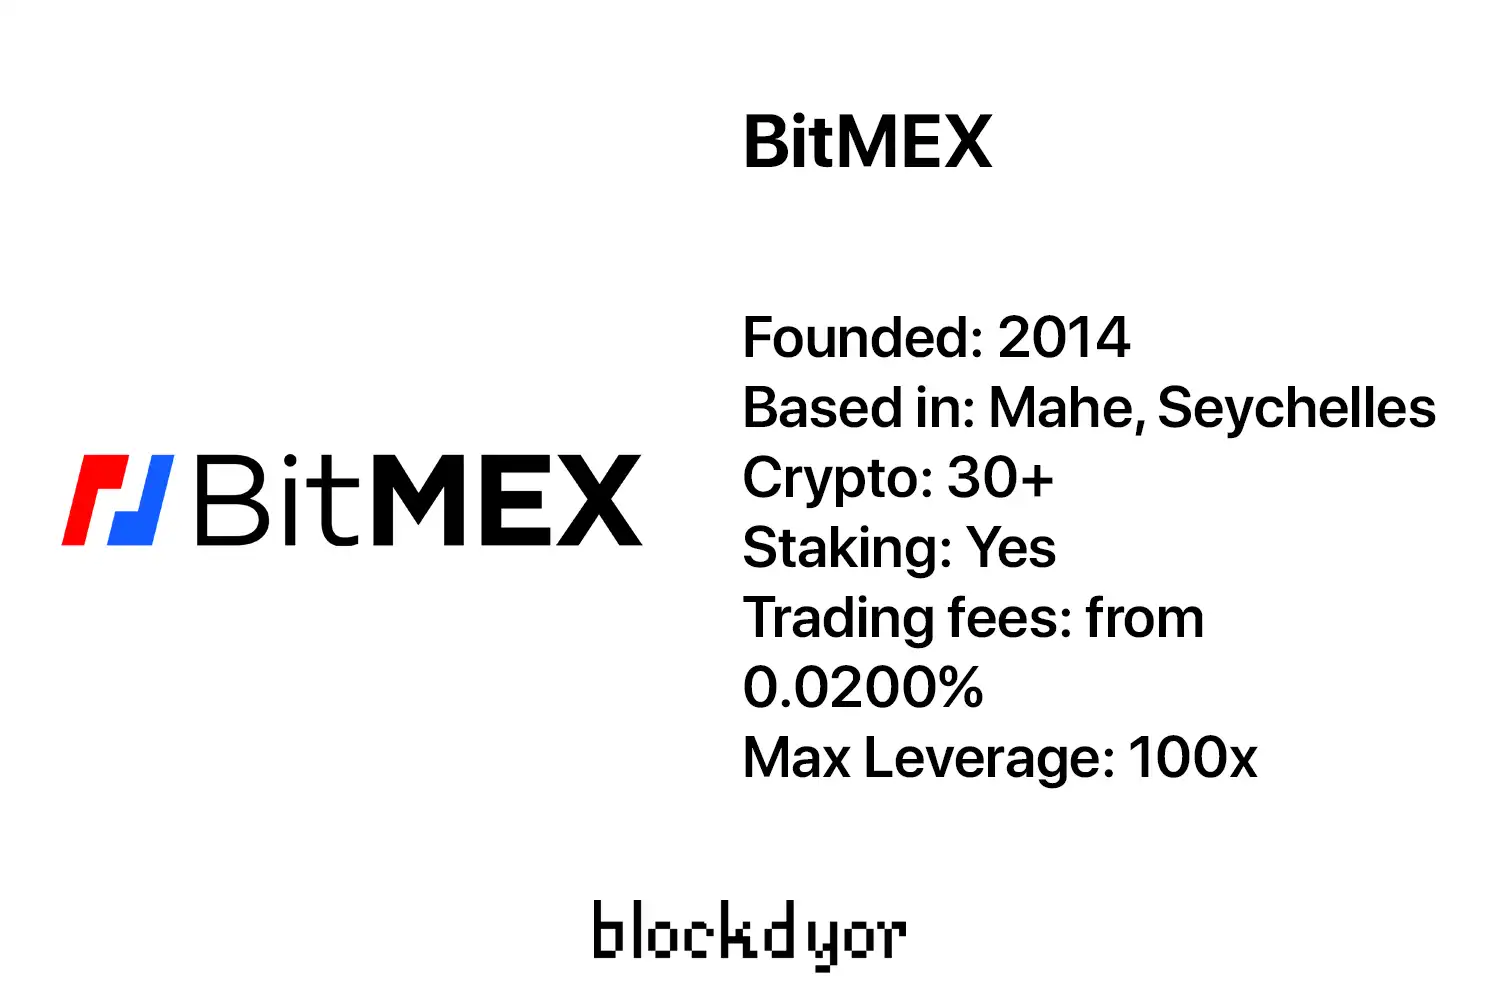 BitMEX Overview